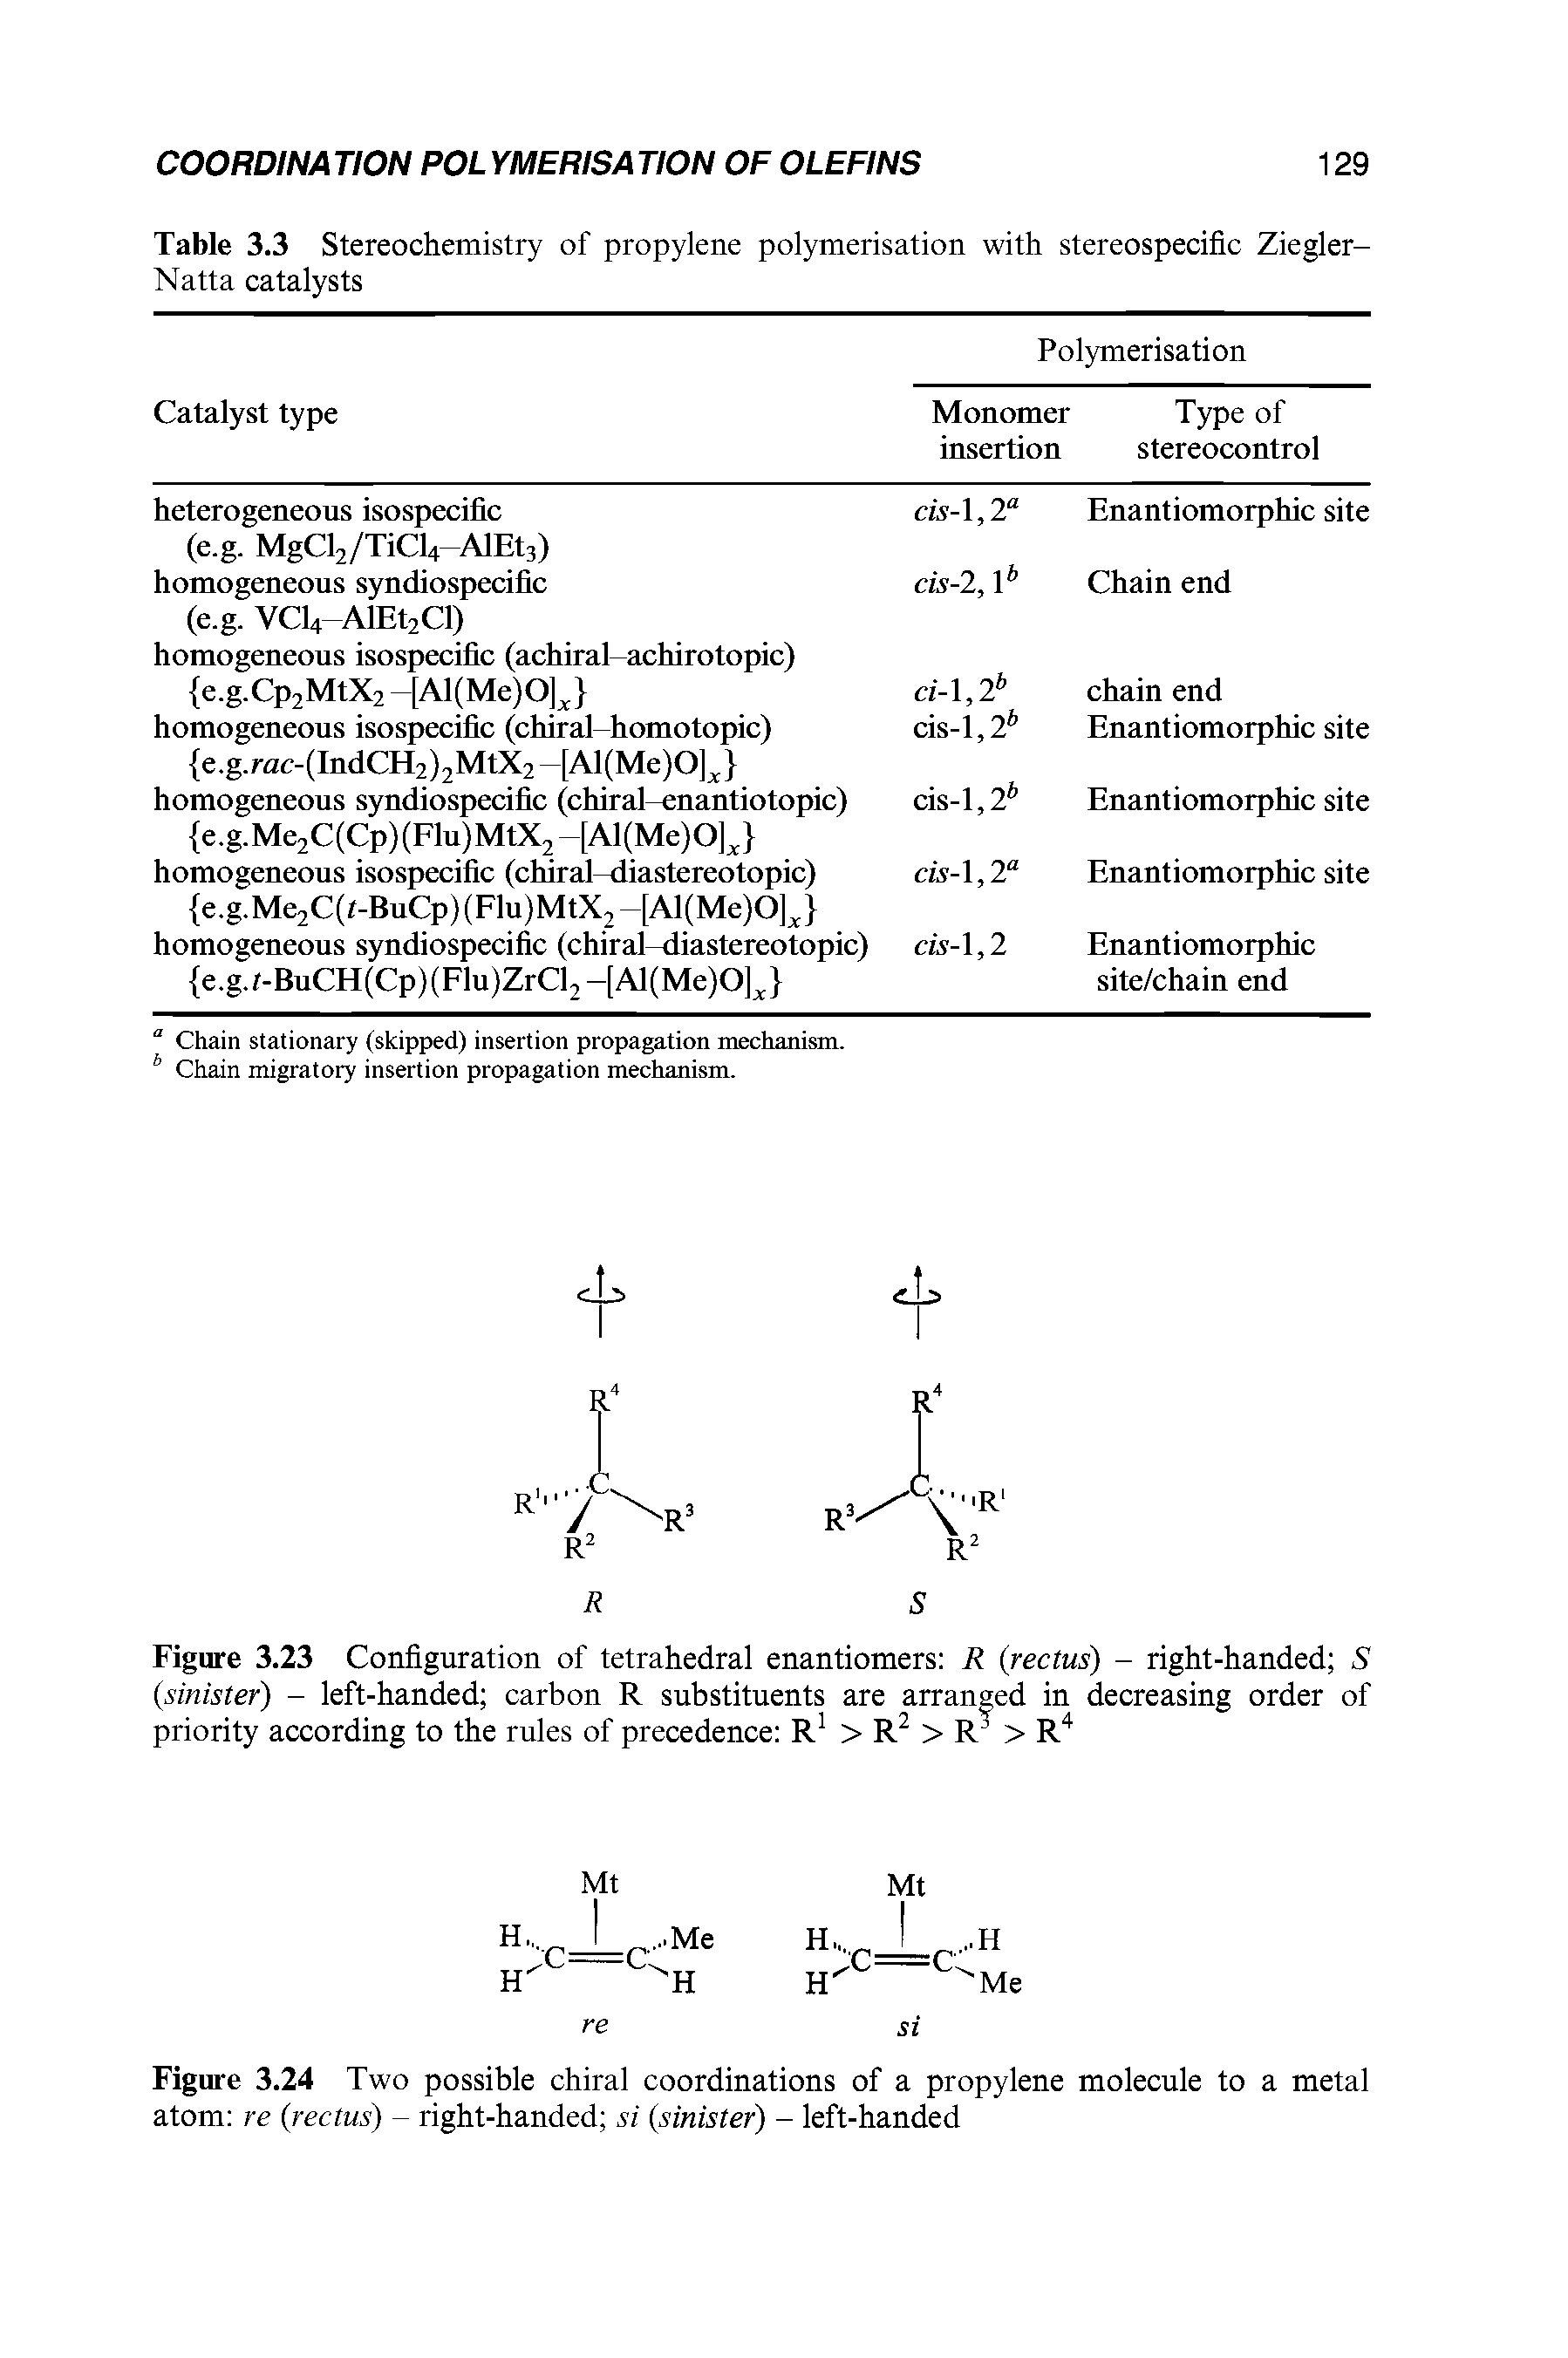 Table 3.3 Stereochemistry of propylene polymerisation with stereospecific Ziegler-Natta catalysts...